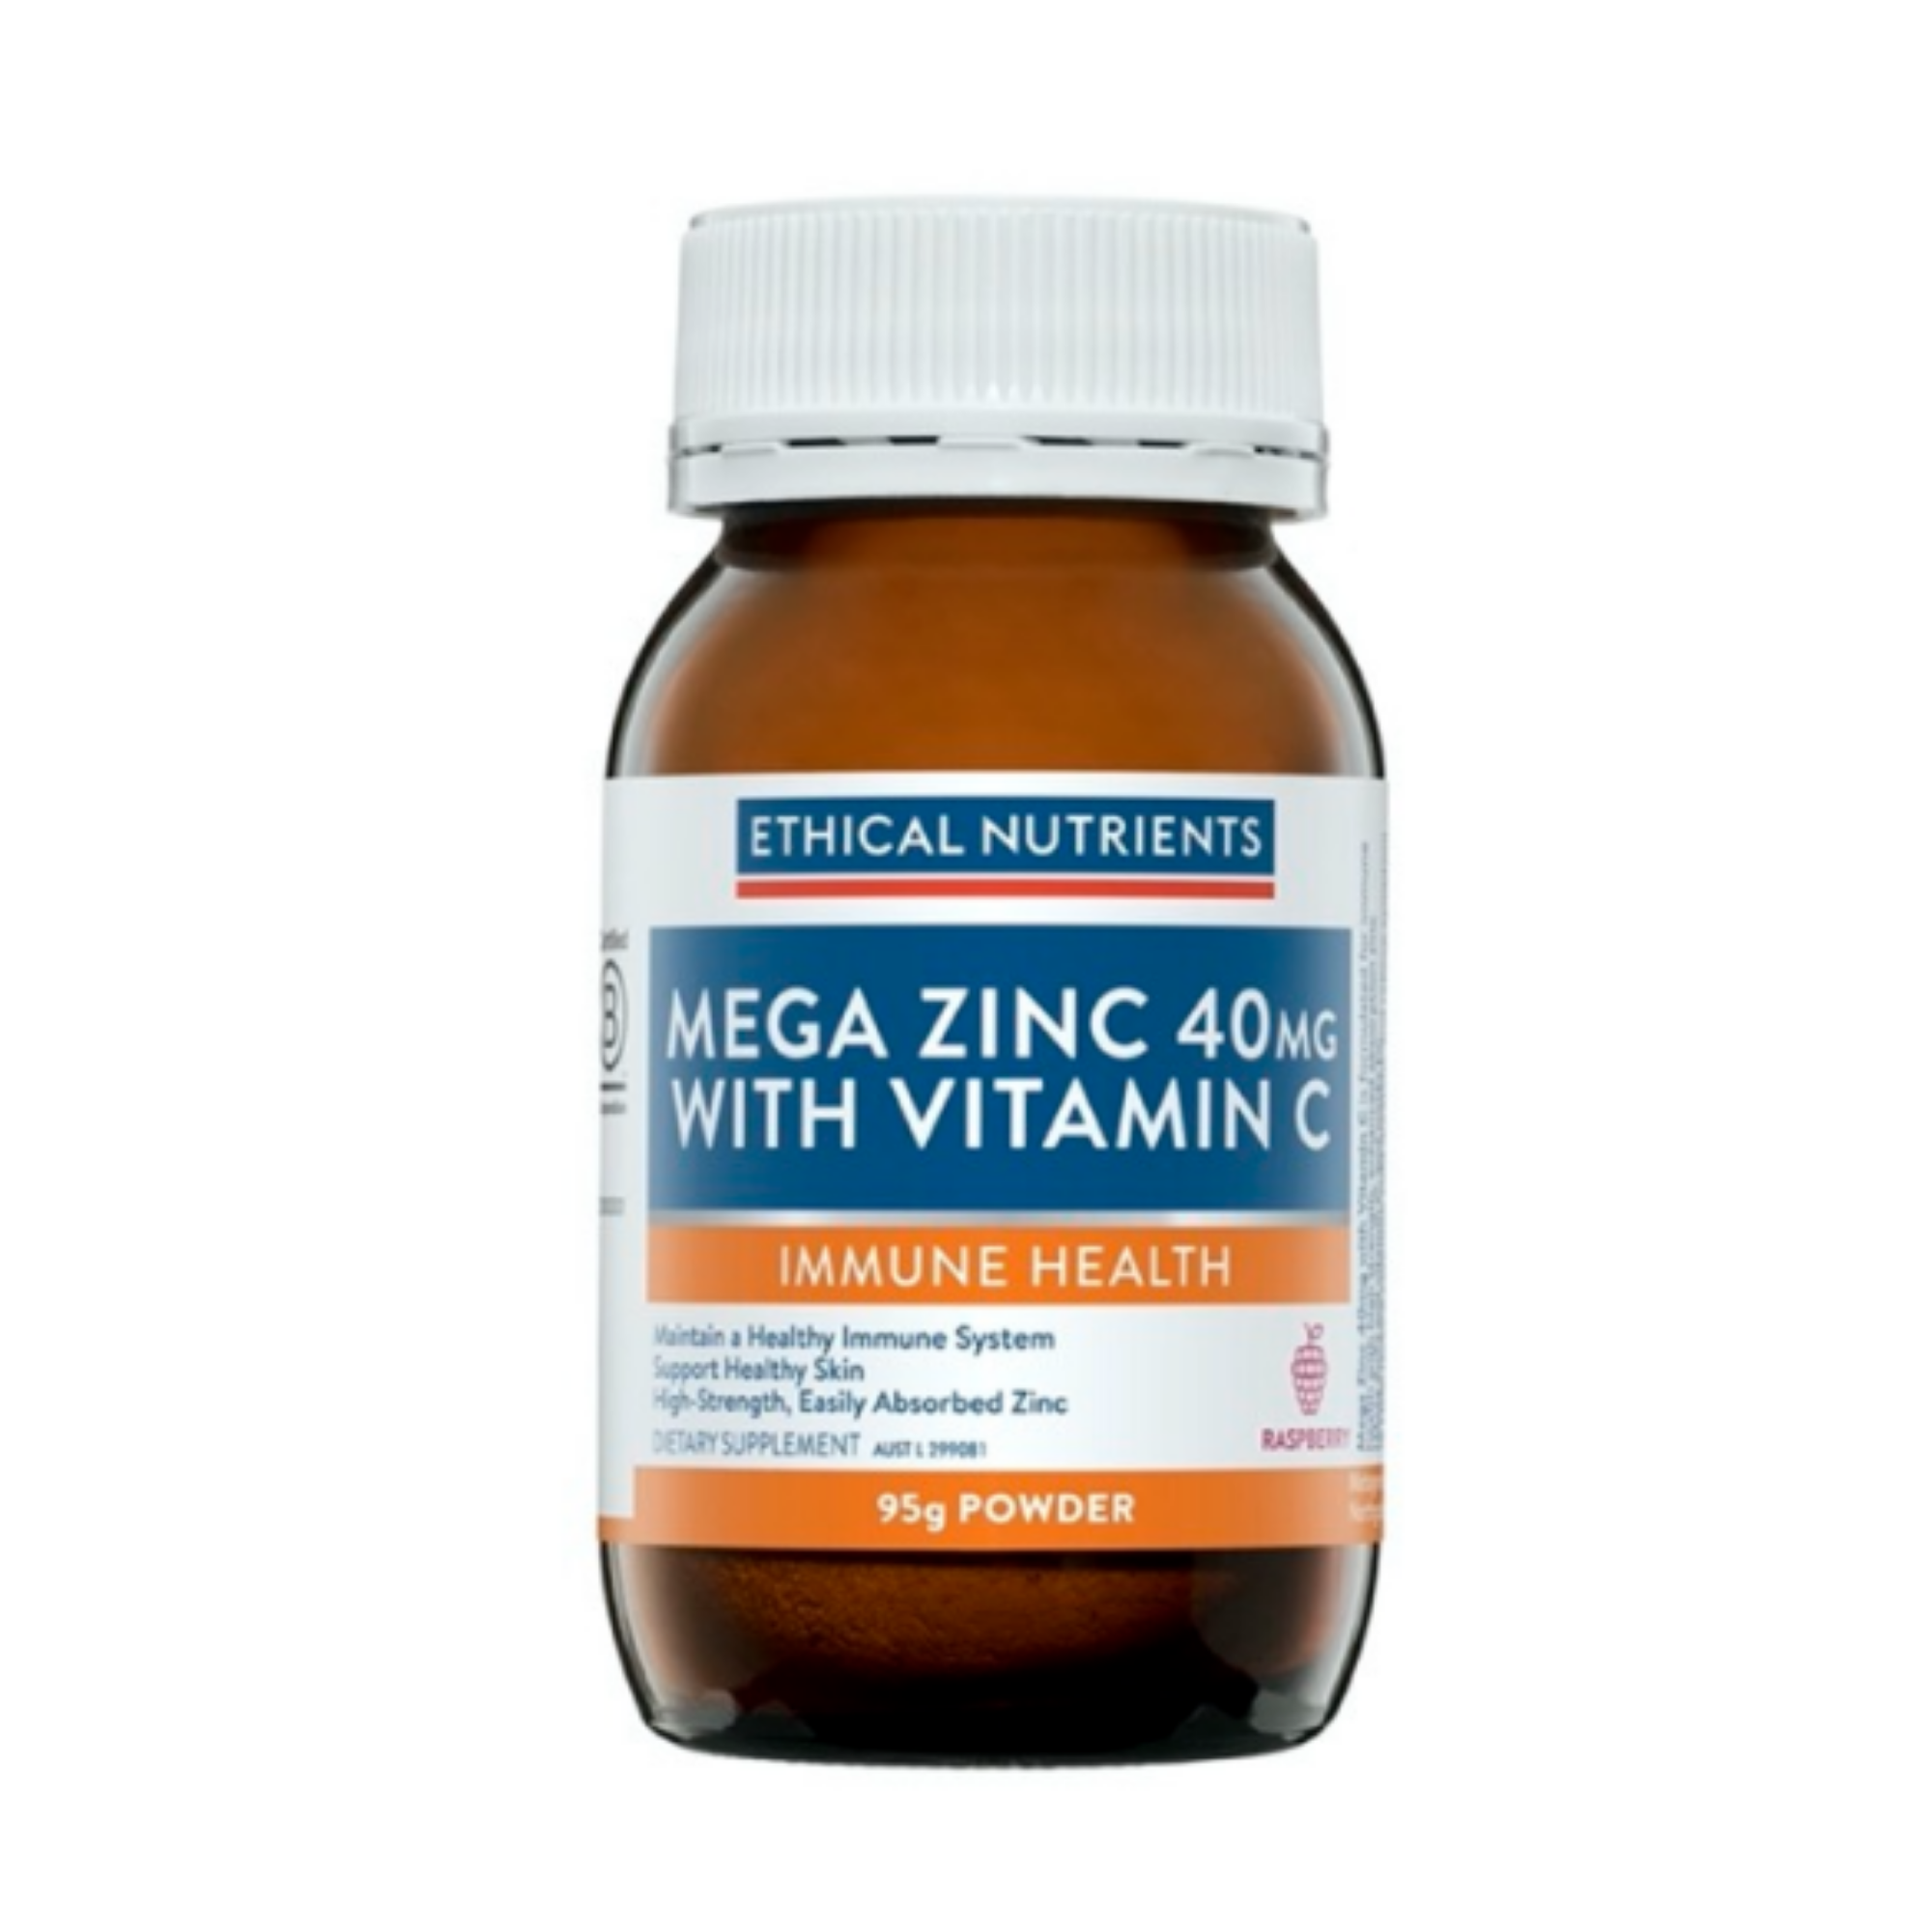 Ethical Nutrients Mega Zinc 40mg Powder 95g